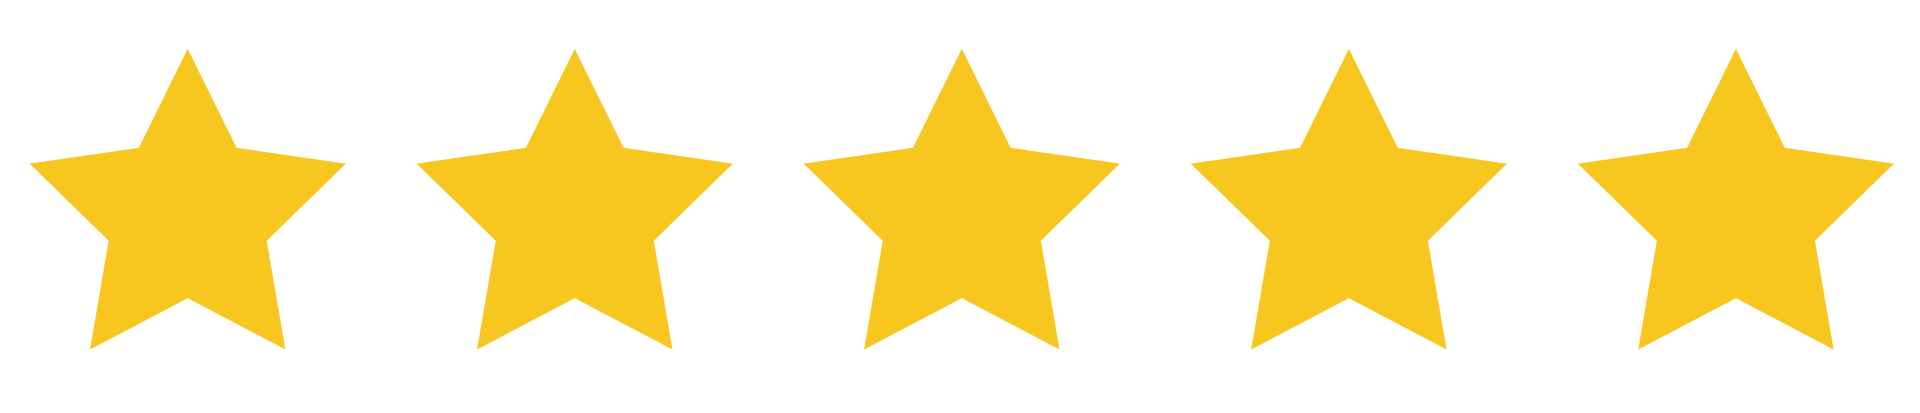 Roofind_Five stars